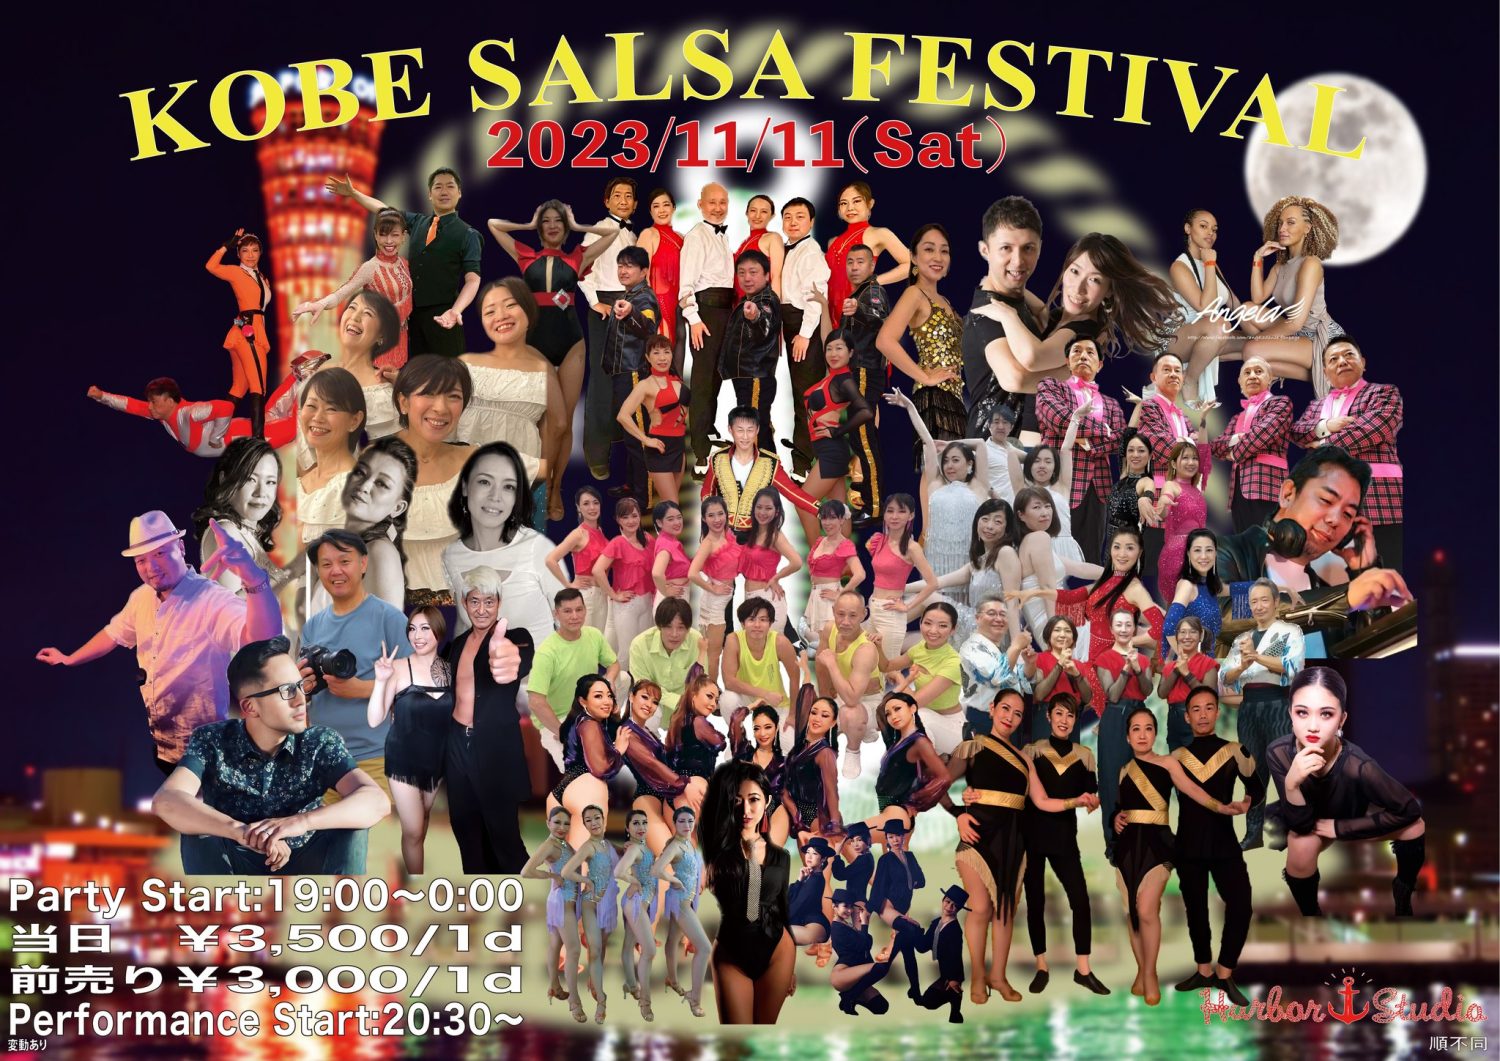 KOBE SALSA FESTIVAL 2023